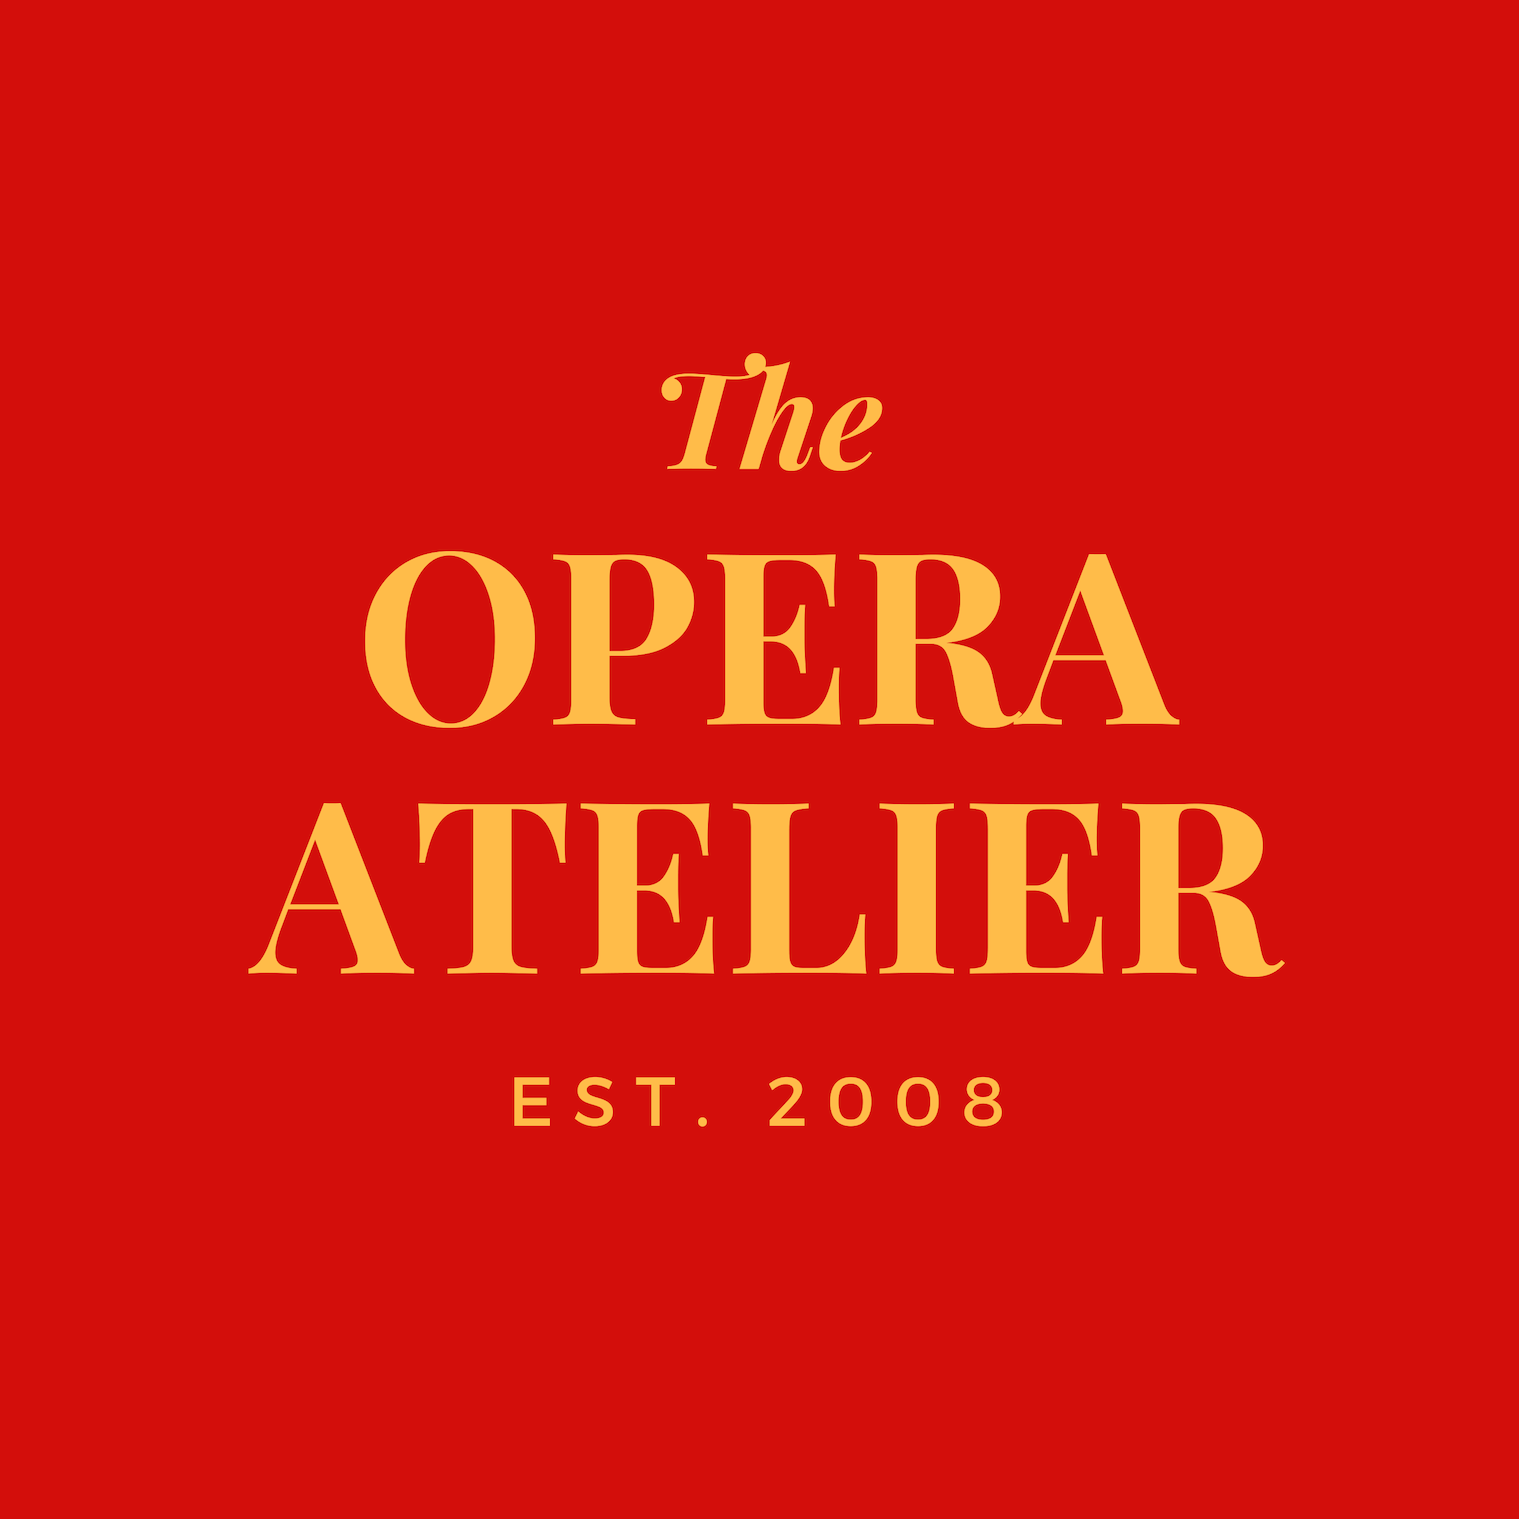 Opera Atelier